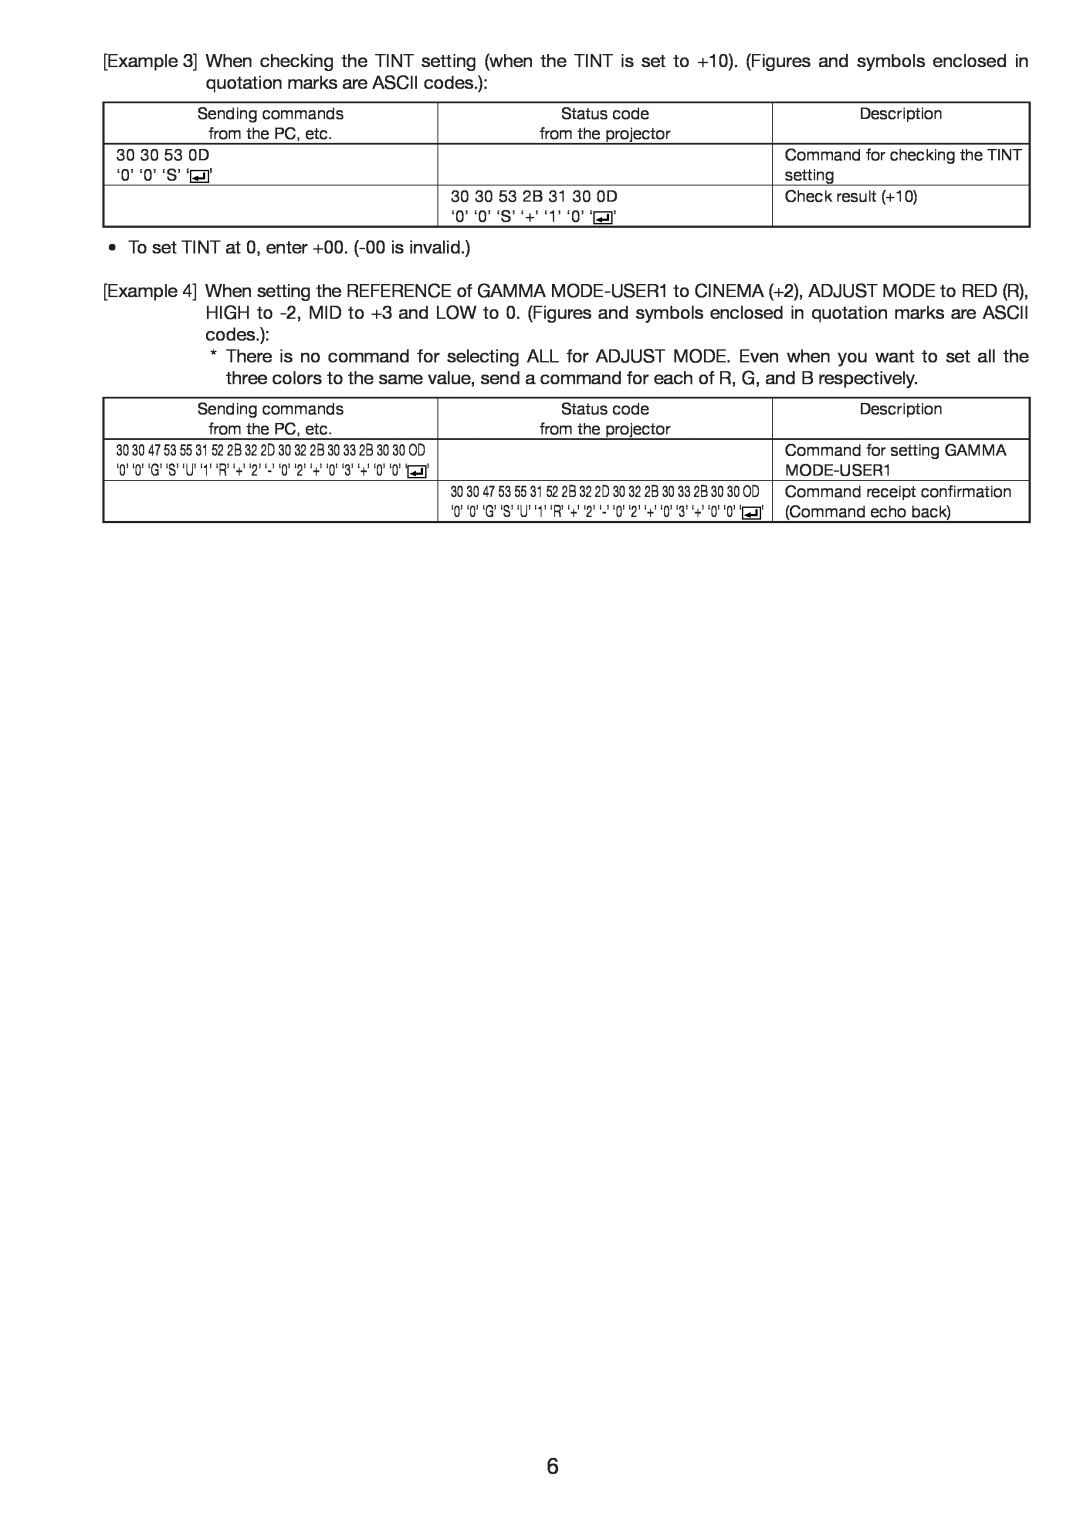 Mitsubishi Electronics HC5500 manual To set TINT at 0, enter +00. -00 is invalid 